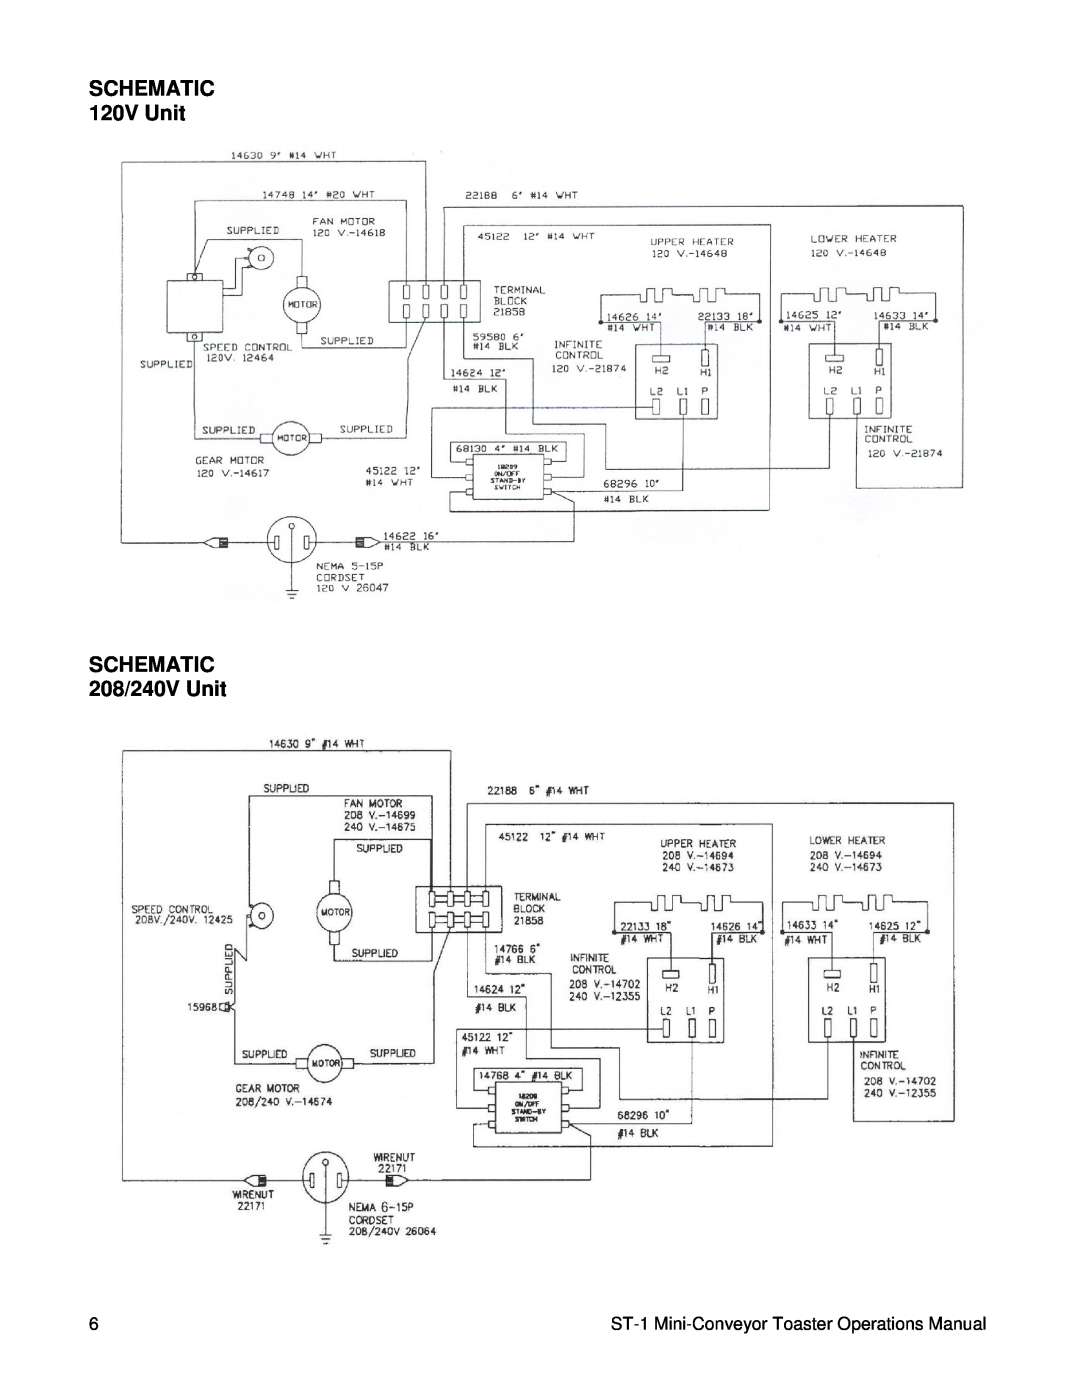 Merco Savory manual SCHEMATIC 120V Unit SCHEMATIC 208/240V Unit, ST-1 Mini-ConveyorToaster Operations Manual 